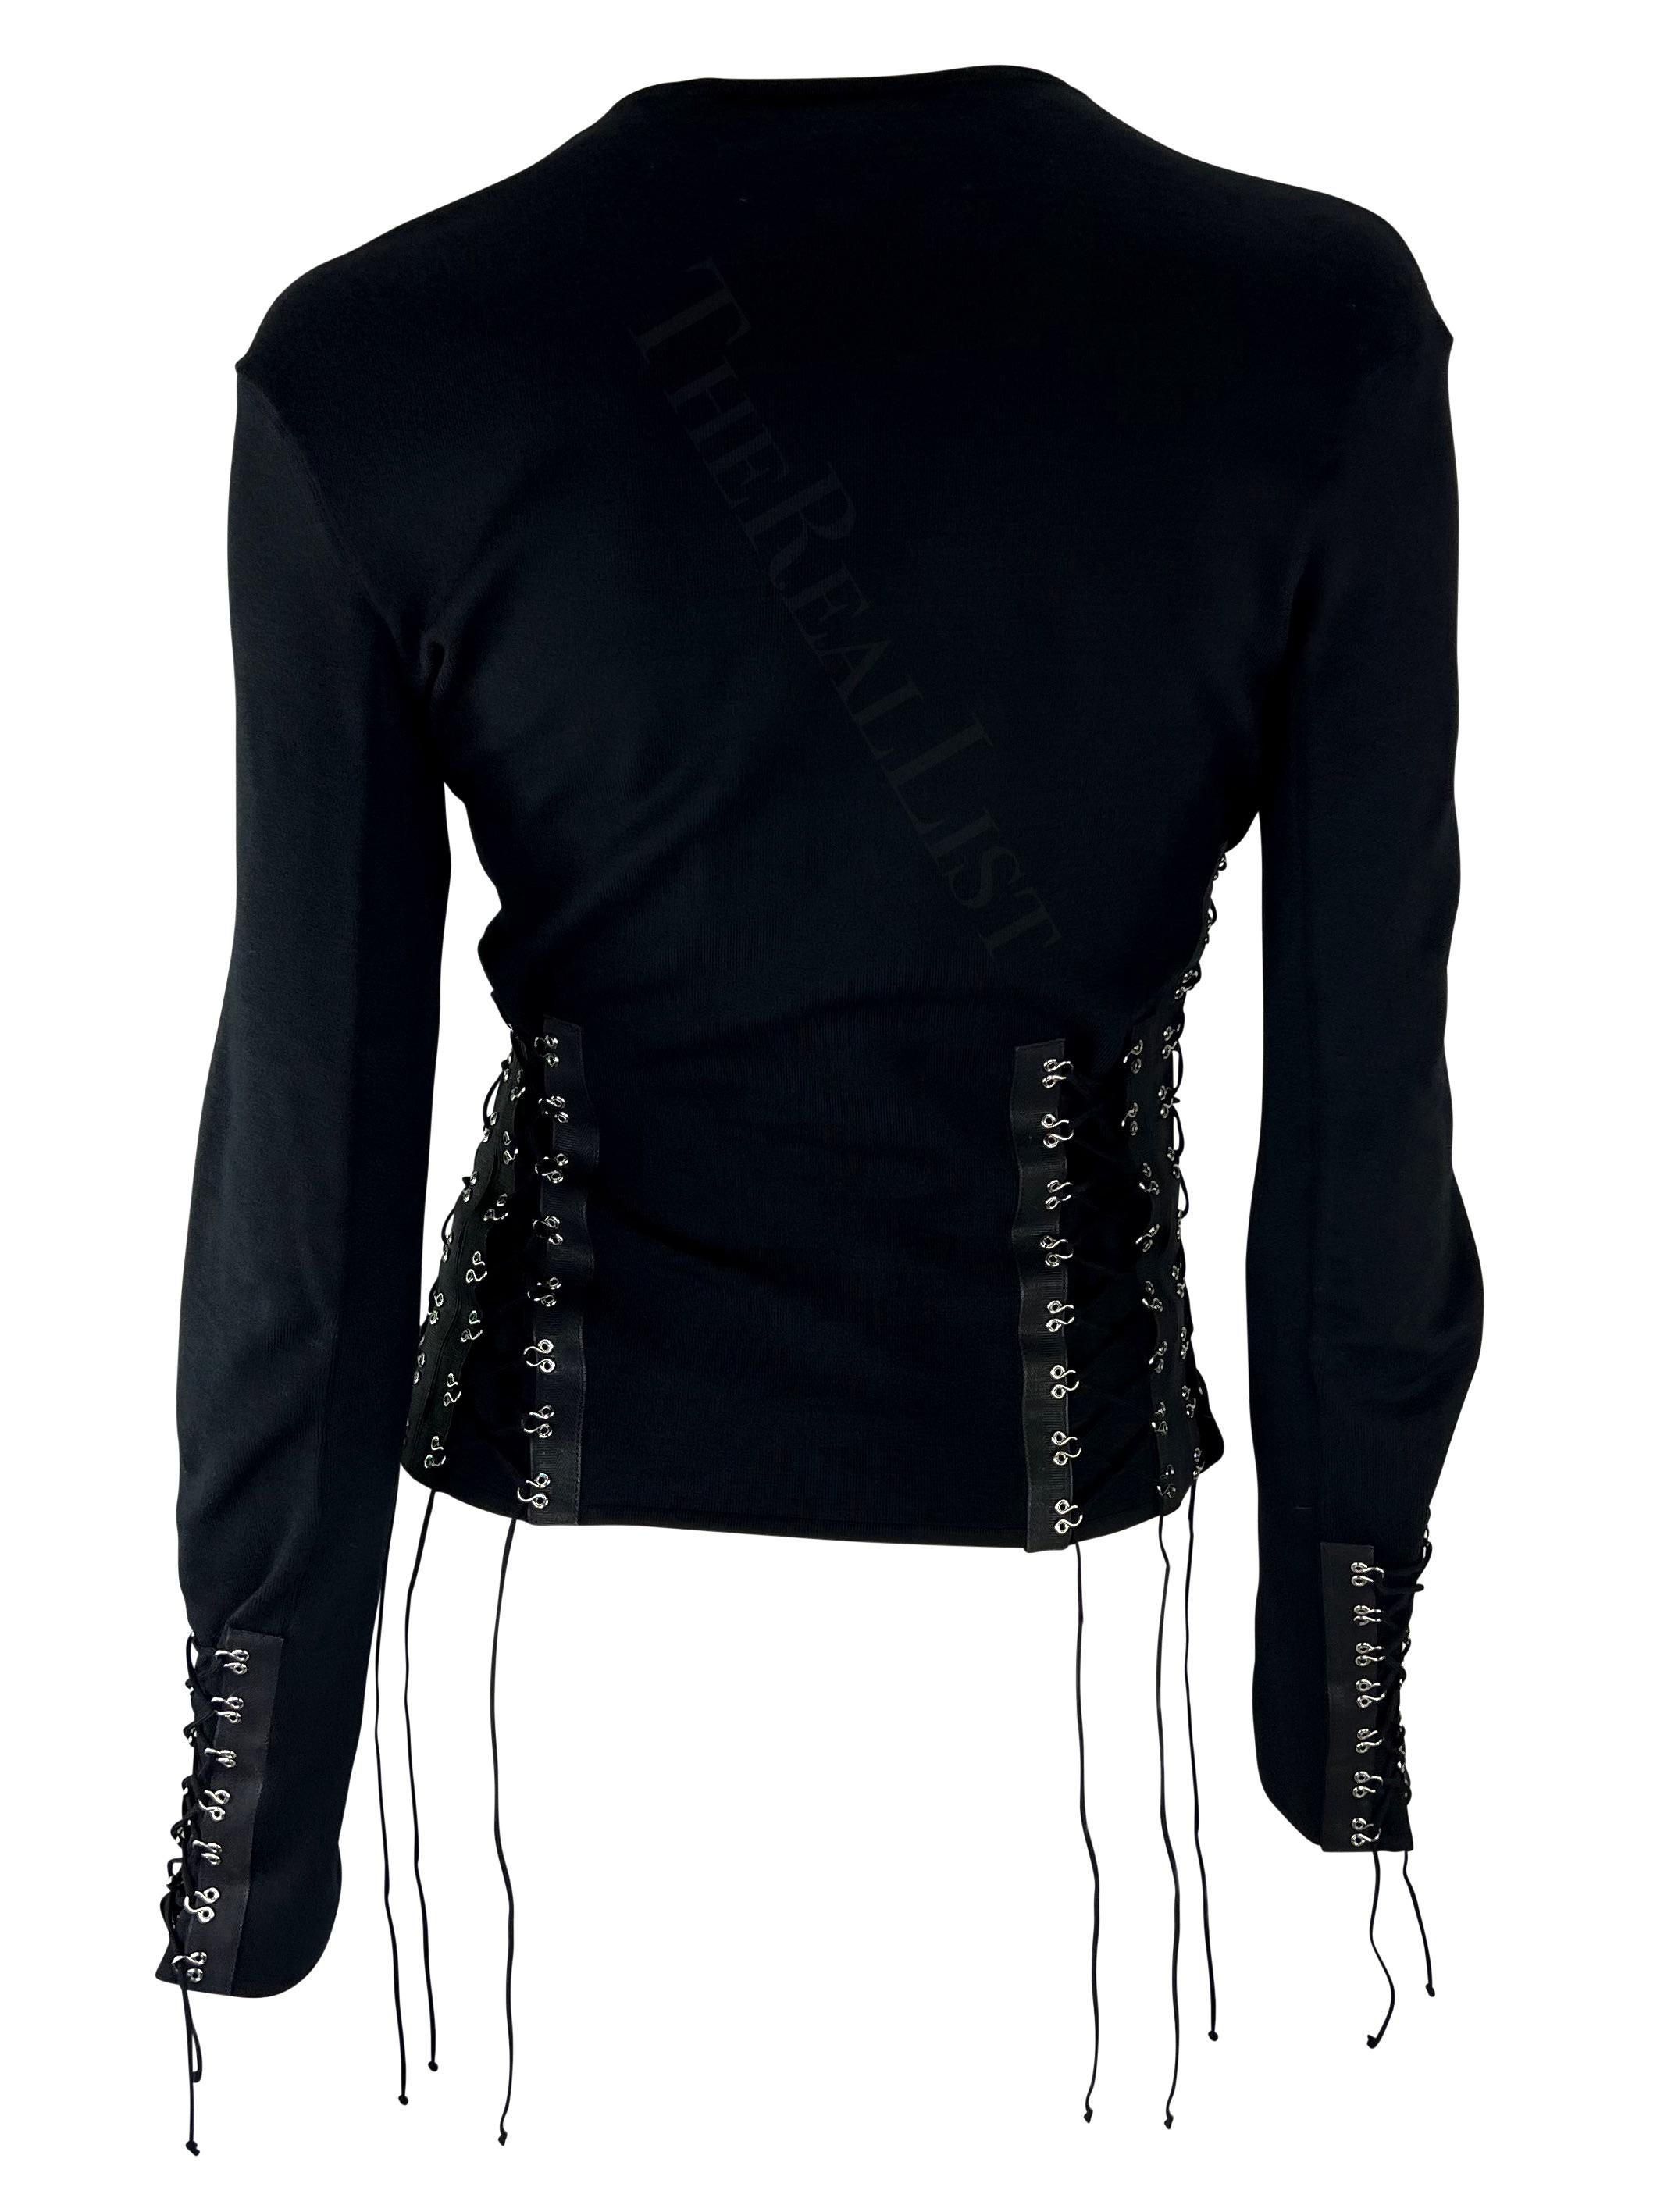 Women's S/S 2003 John Galliano Black Black Knit Hook Lace Up Sweater Top For Sale